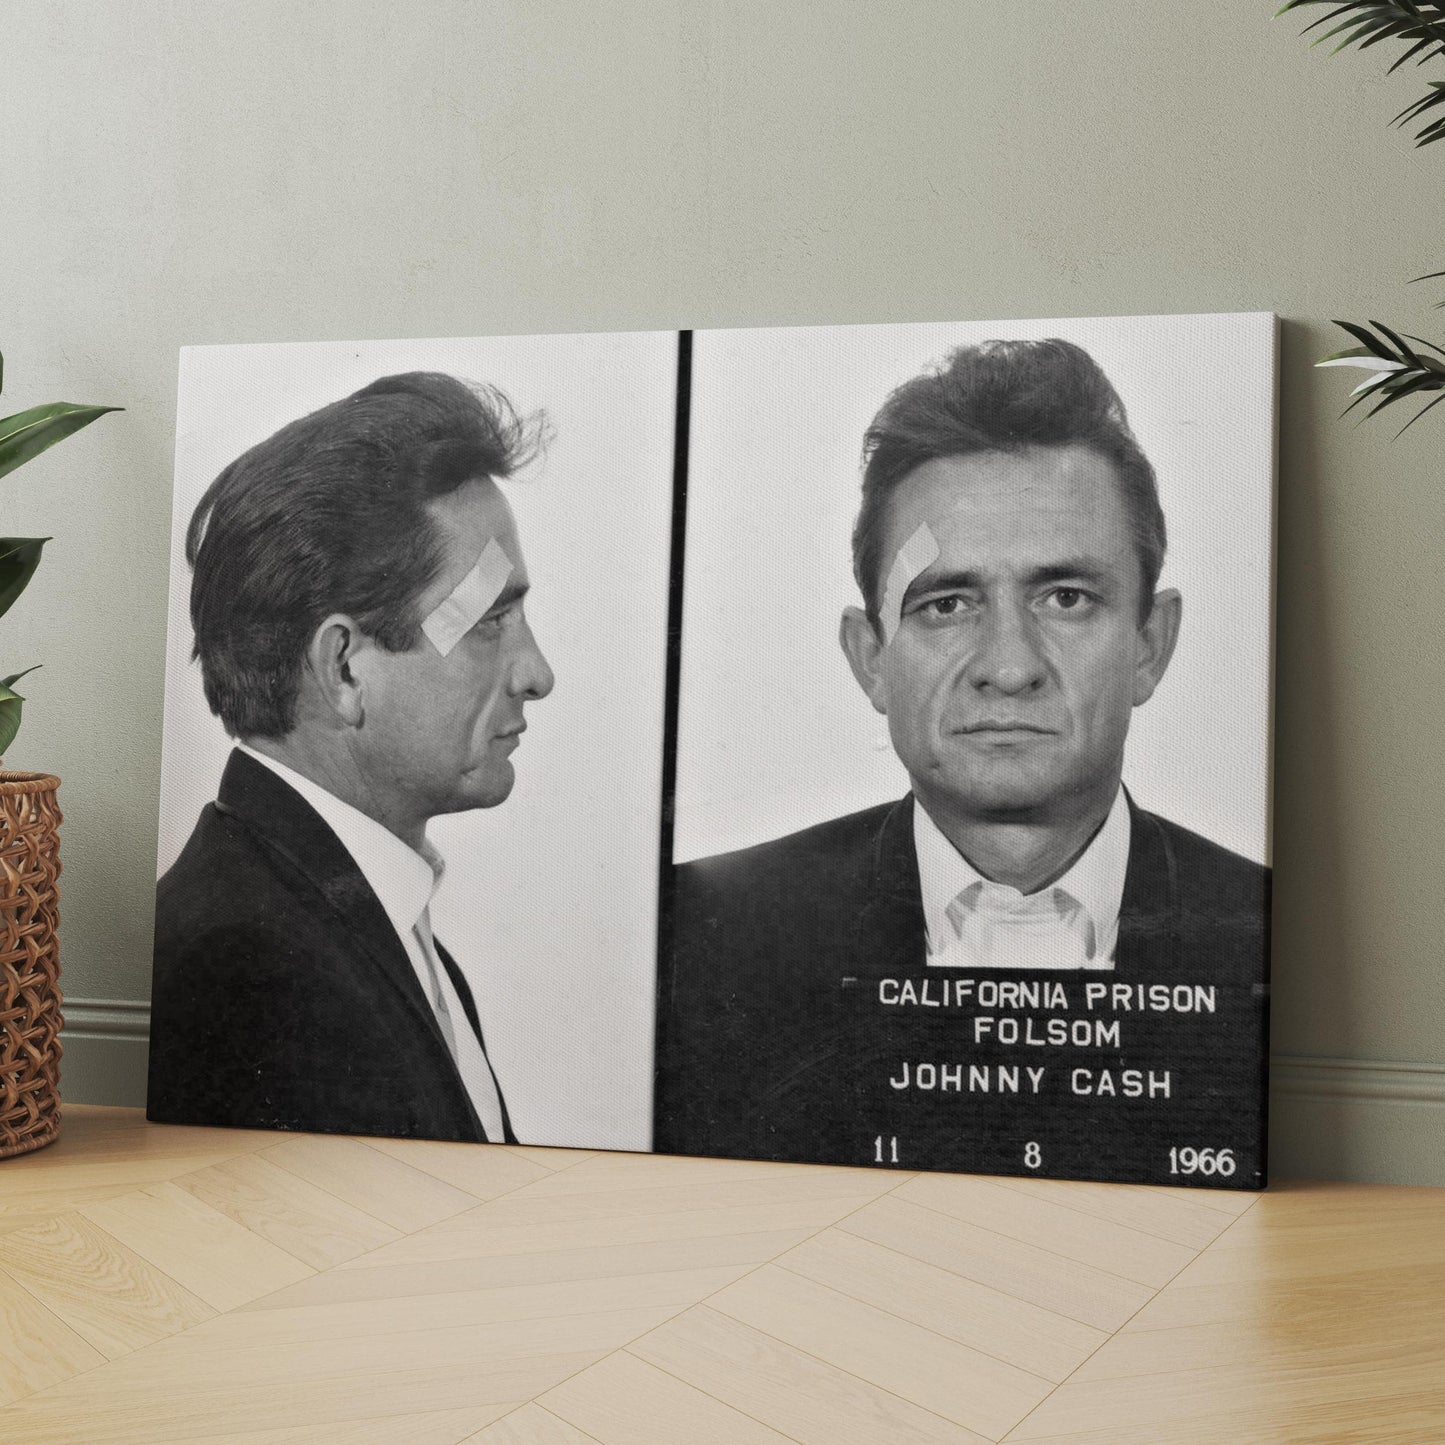 Johnny Cash Prison Mug Shots